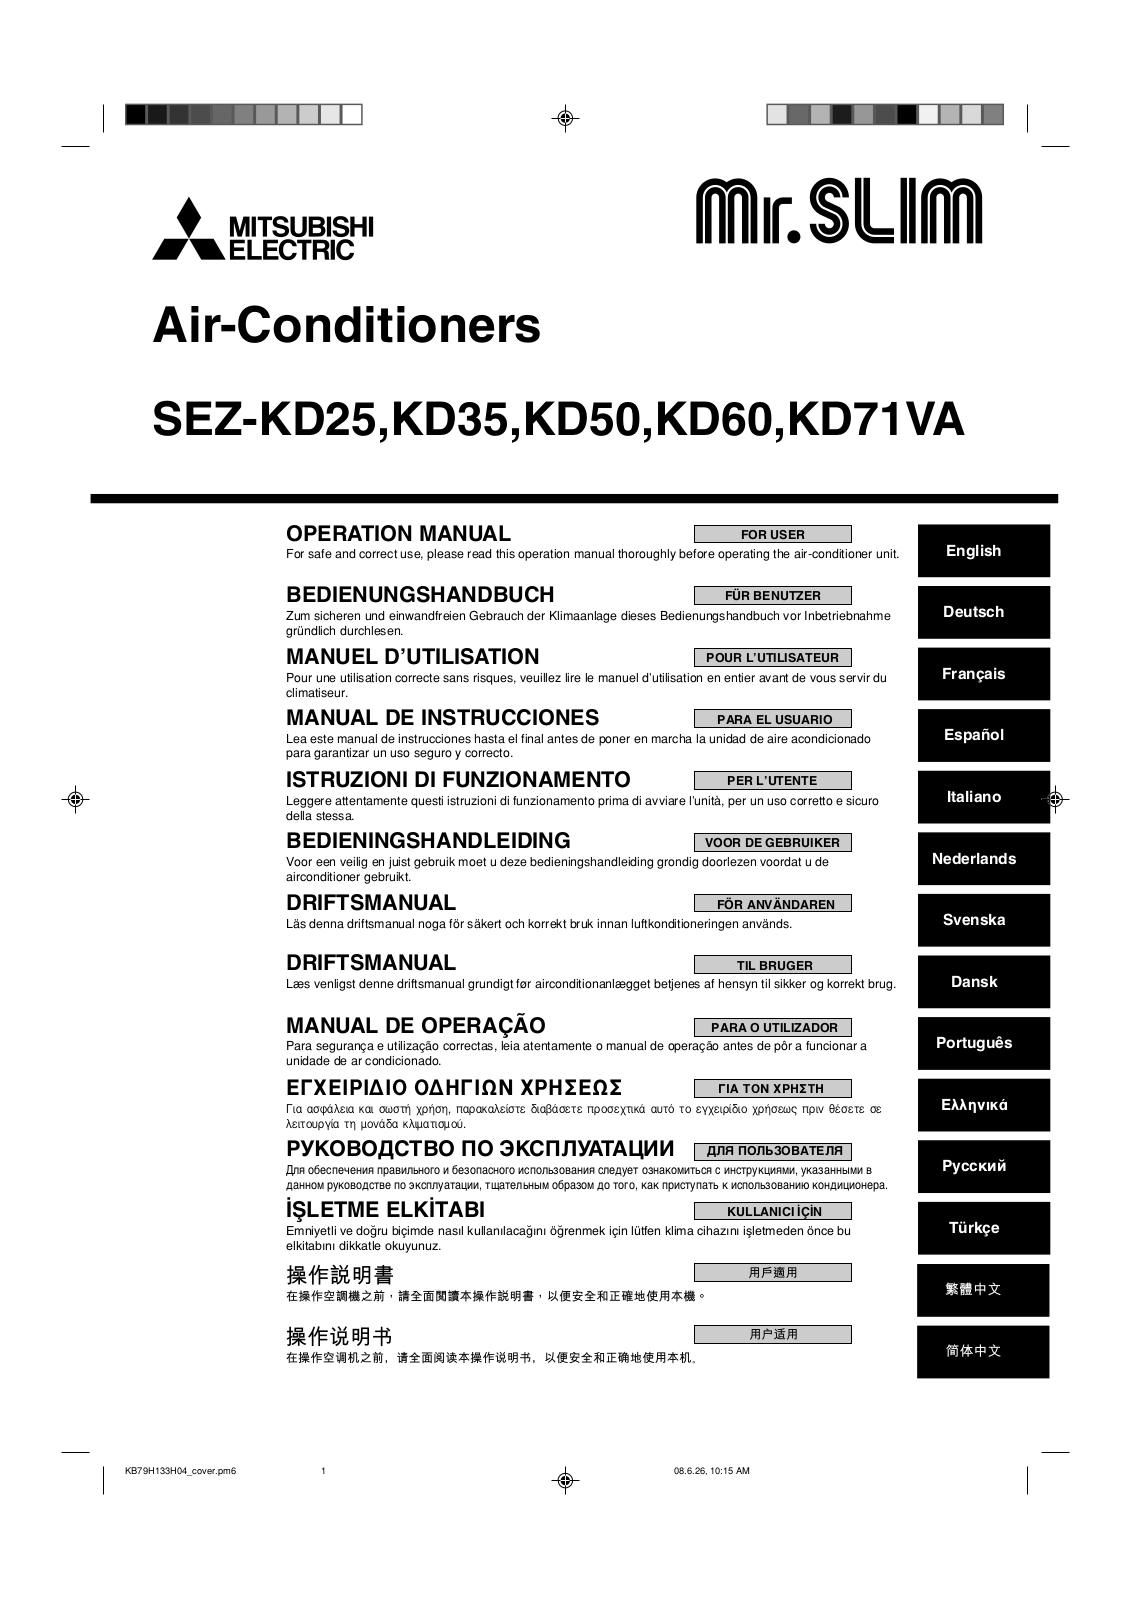 Mitsubishi SEZ-KD25VA, SEZ-KD35VA, SEZ-KD50VA, SEZ-KD60VA, SEZ-KD71VA User Manual